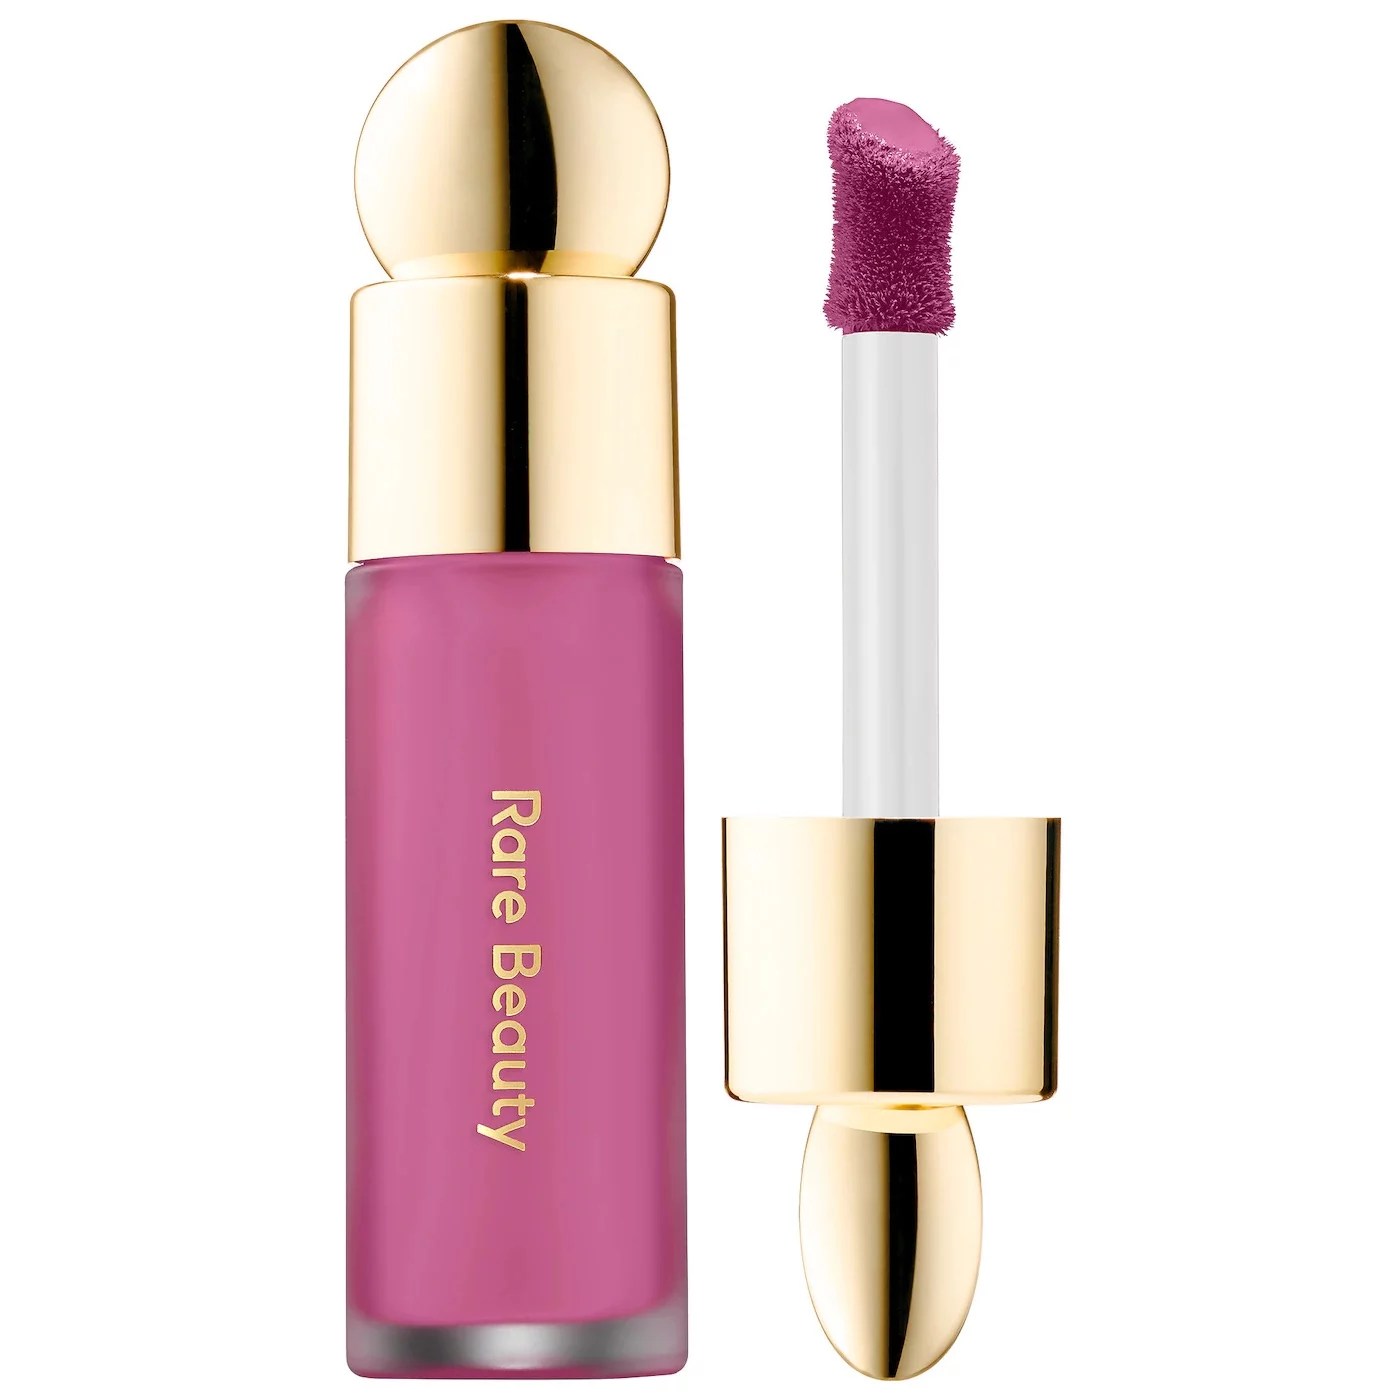 A tube of Rare Beauty by Selena Gomez Soft Pinch Liquid Blush.